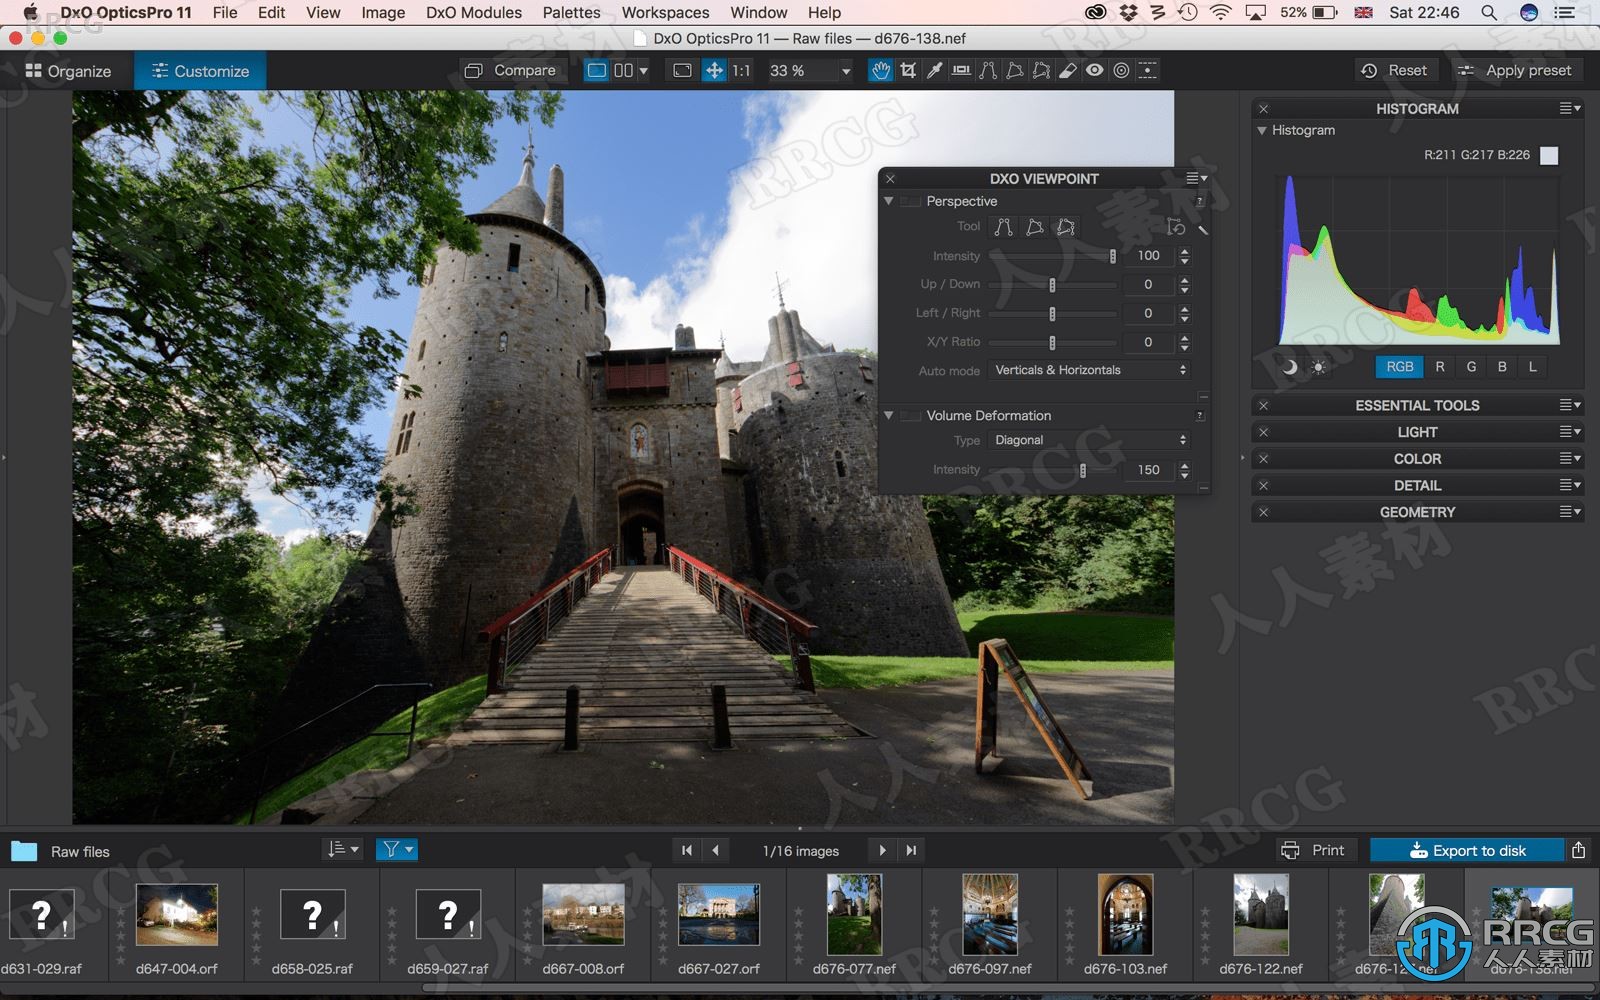 DxO ViewPoint图像处理软件V4.7.0版